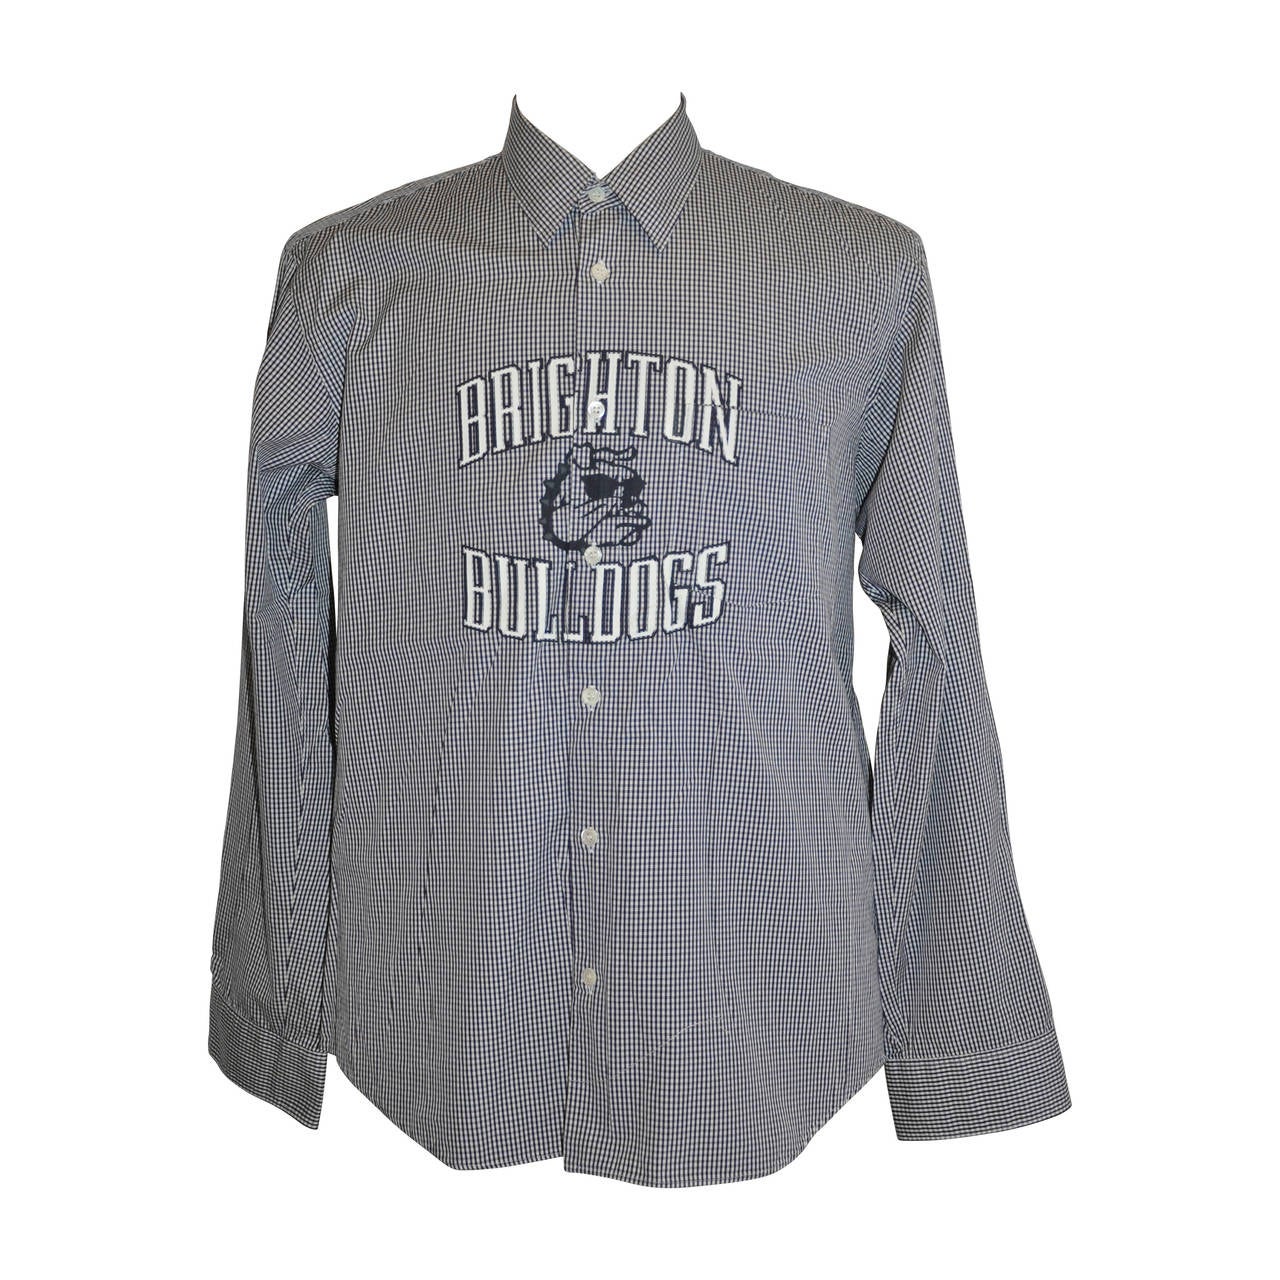 Yunya Watanabe Comme des Garcons "Brighton Bulldogs" Checkered Shirt For Sale